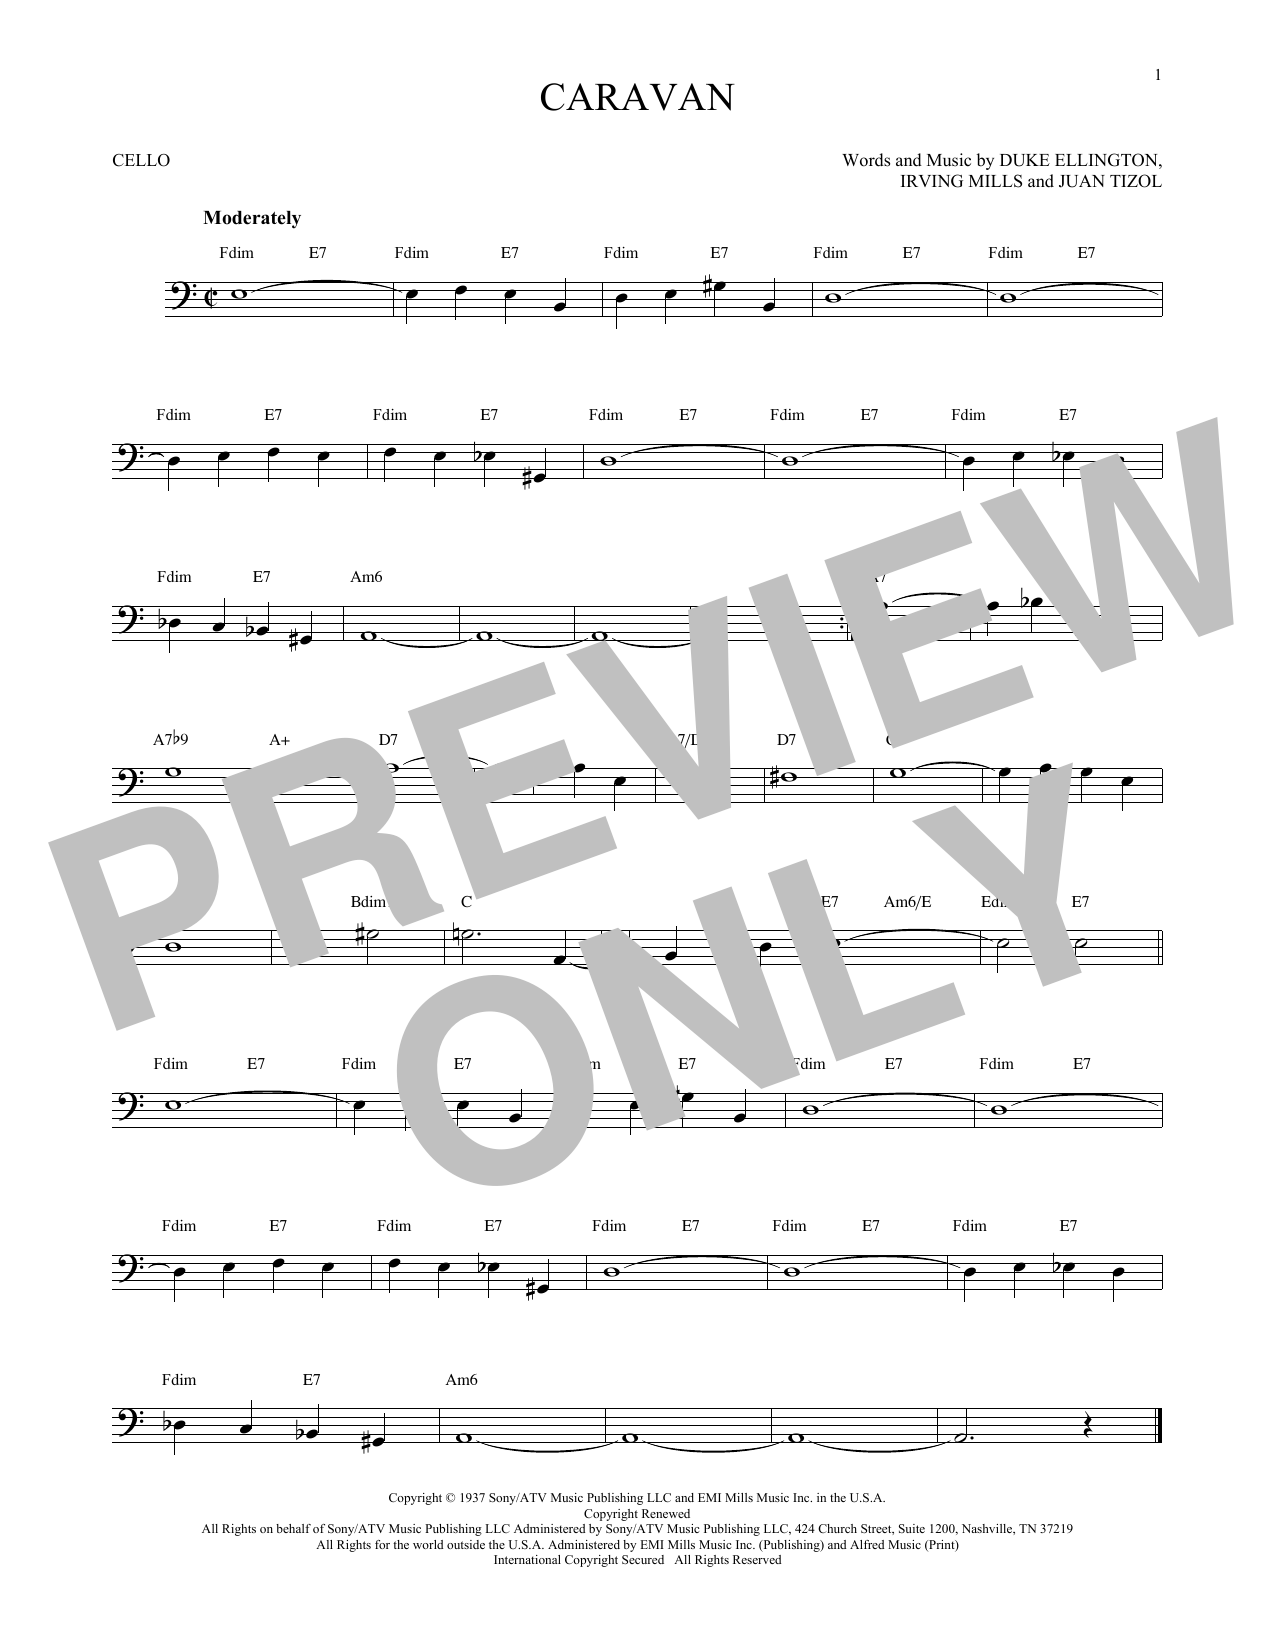 Juan Tizol & Duke Ellington Caravan Sheet Music Notes & Chords for Viola - Download or Print PDF